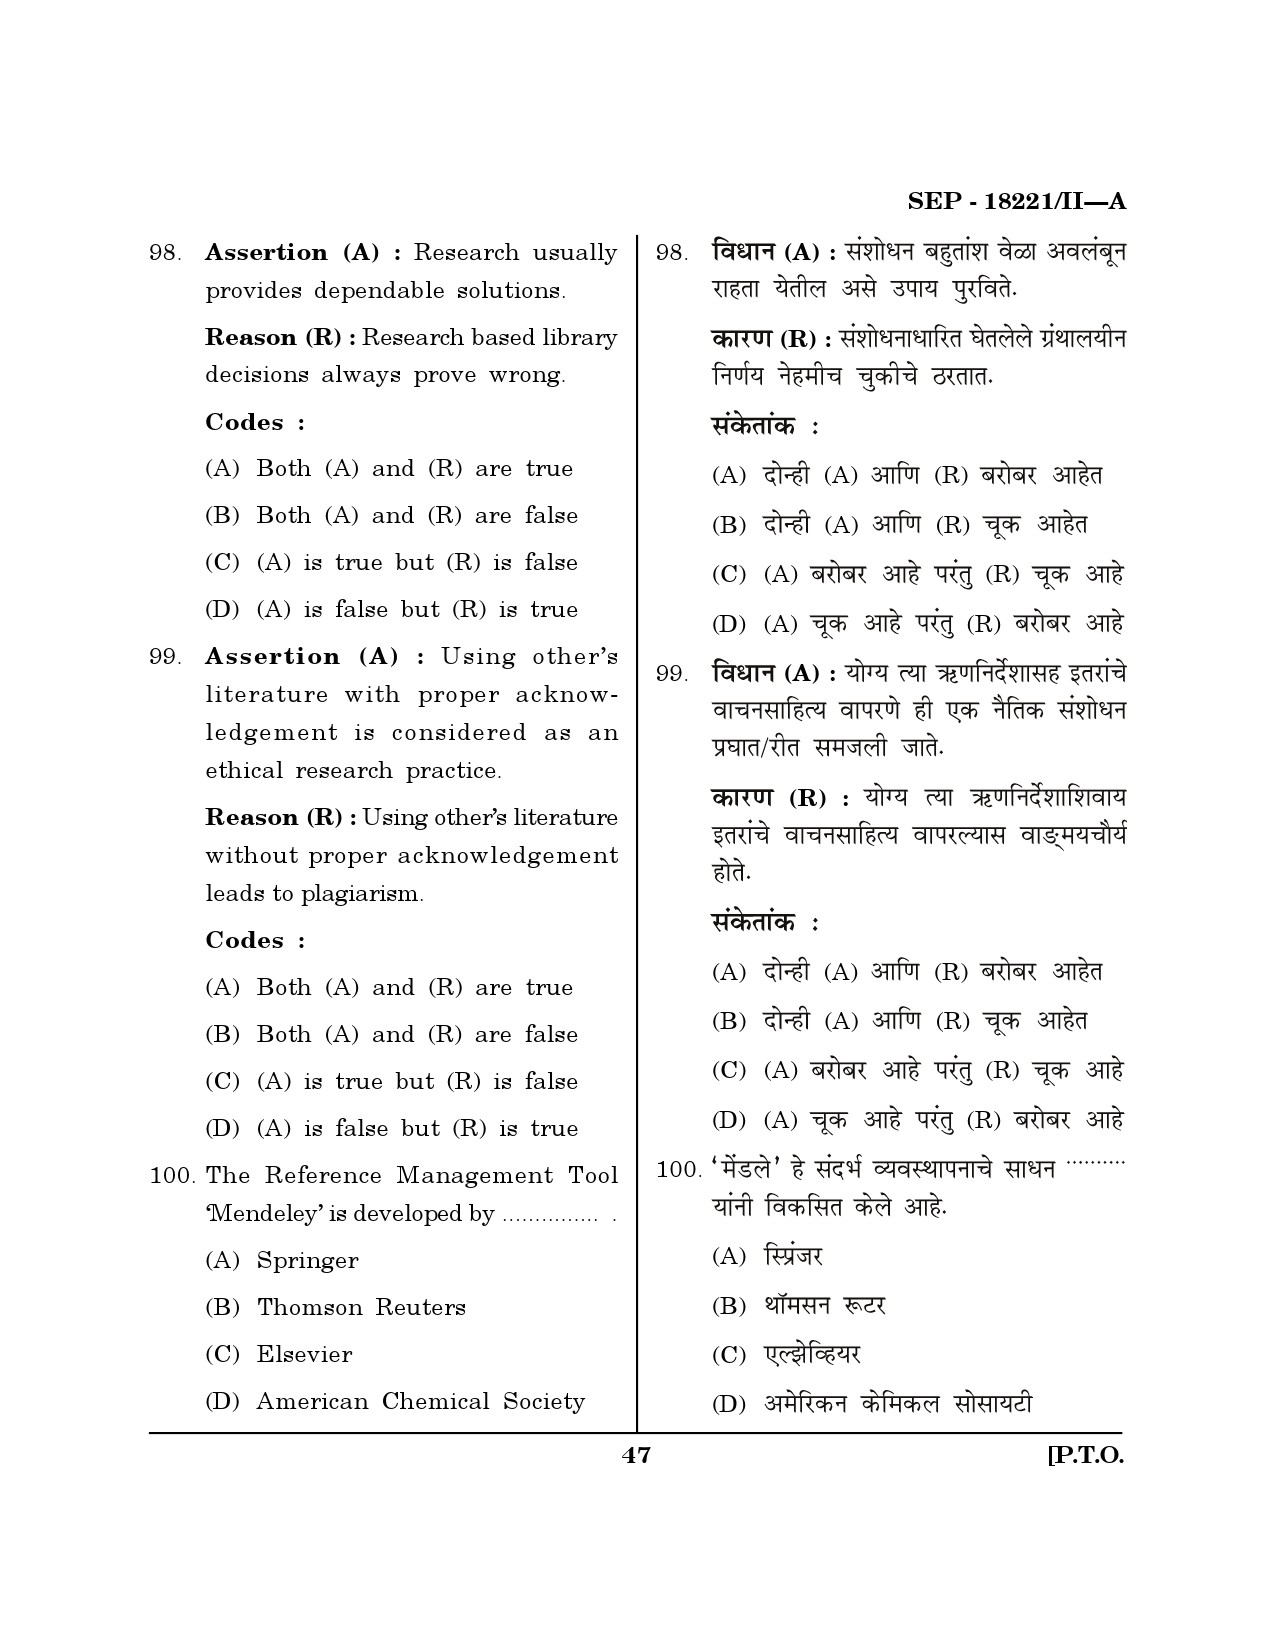 Maharashtra SET Library Information Science Exam Question Paper September 2021 46